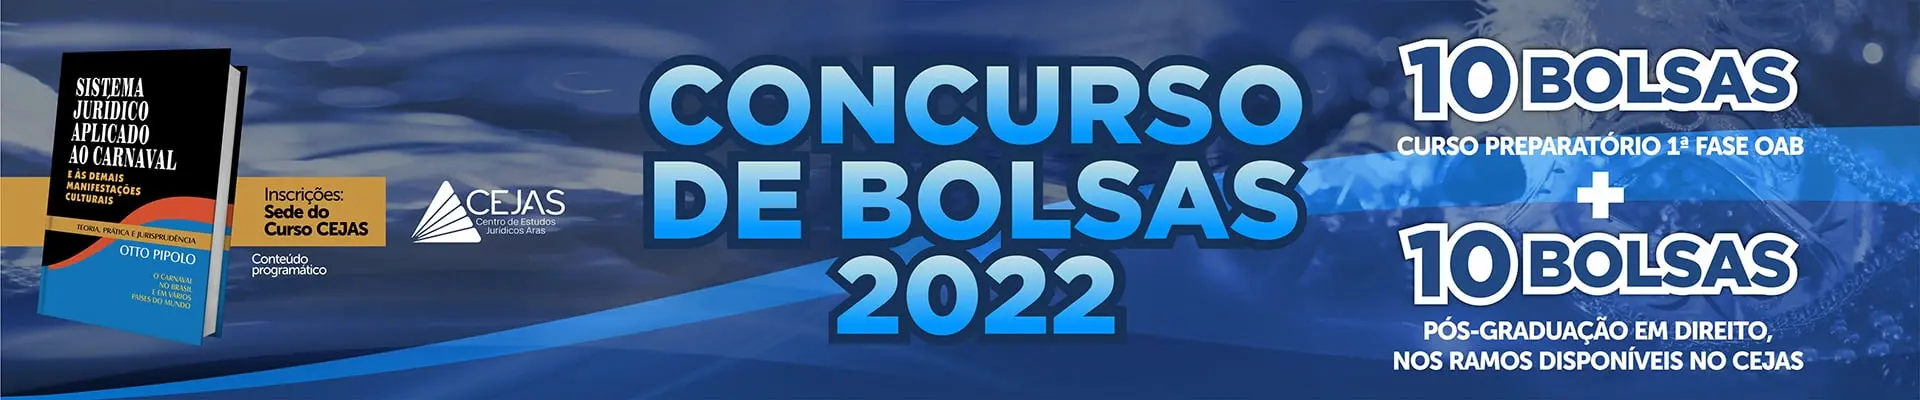 CONCURSO DE BOLSAS